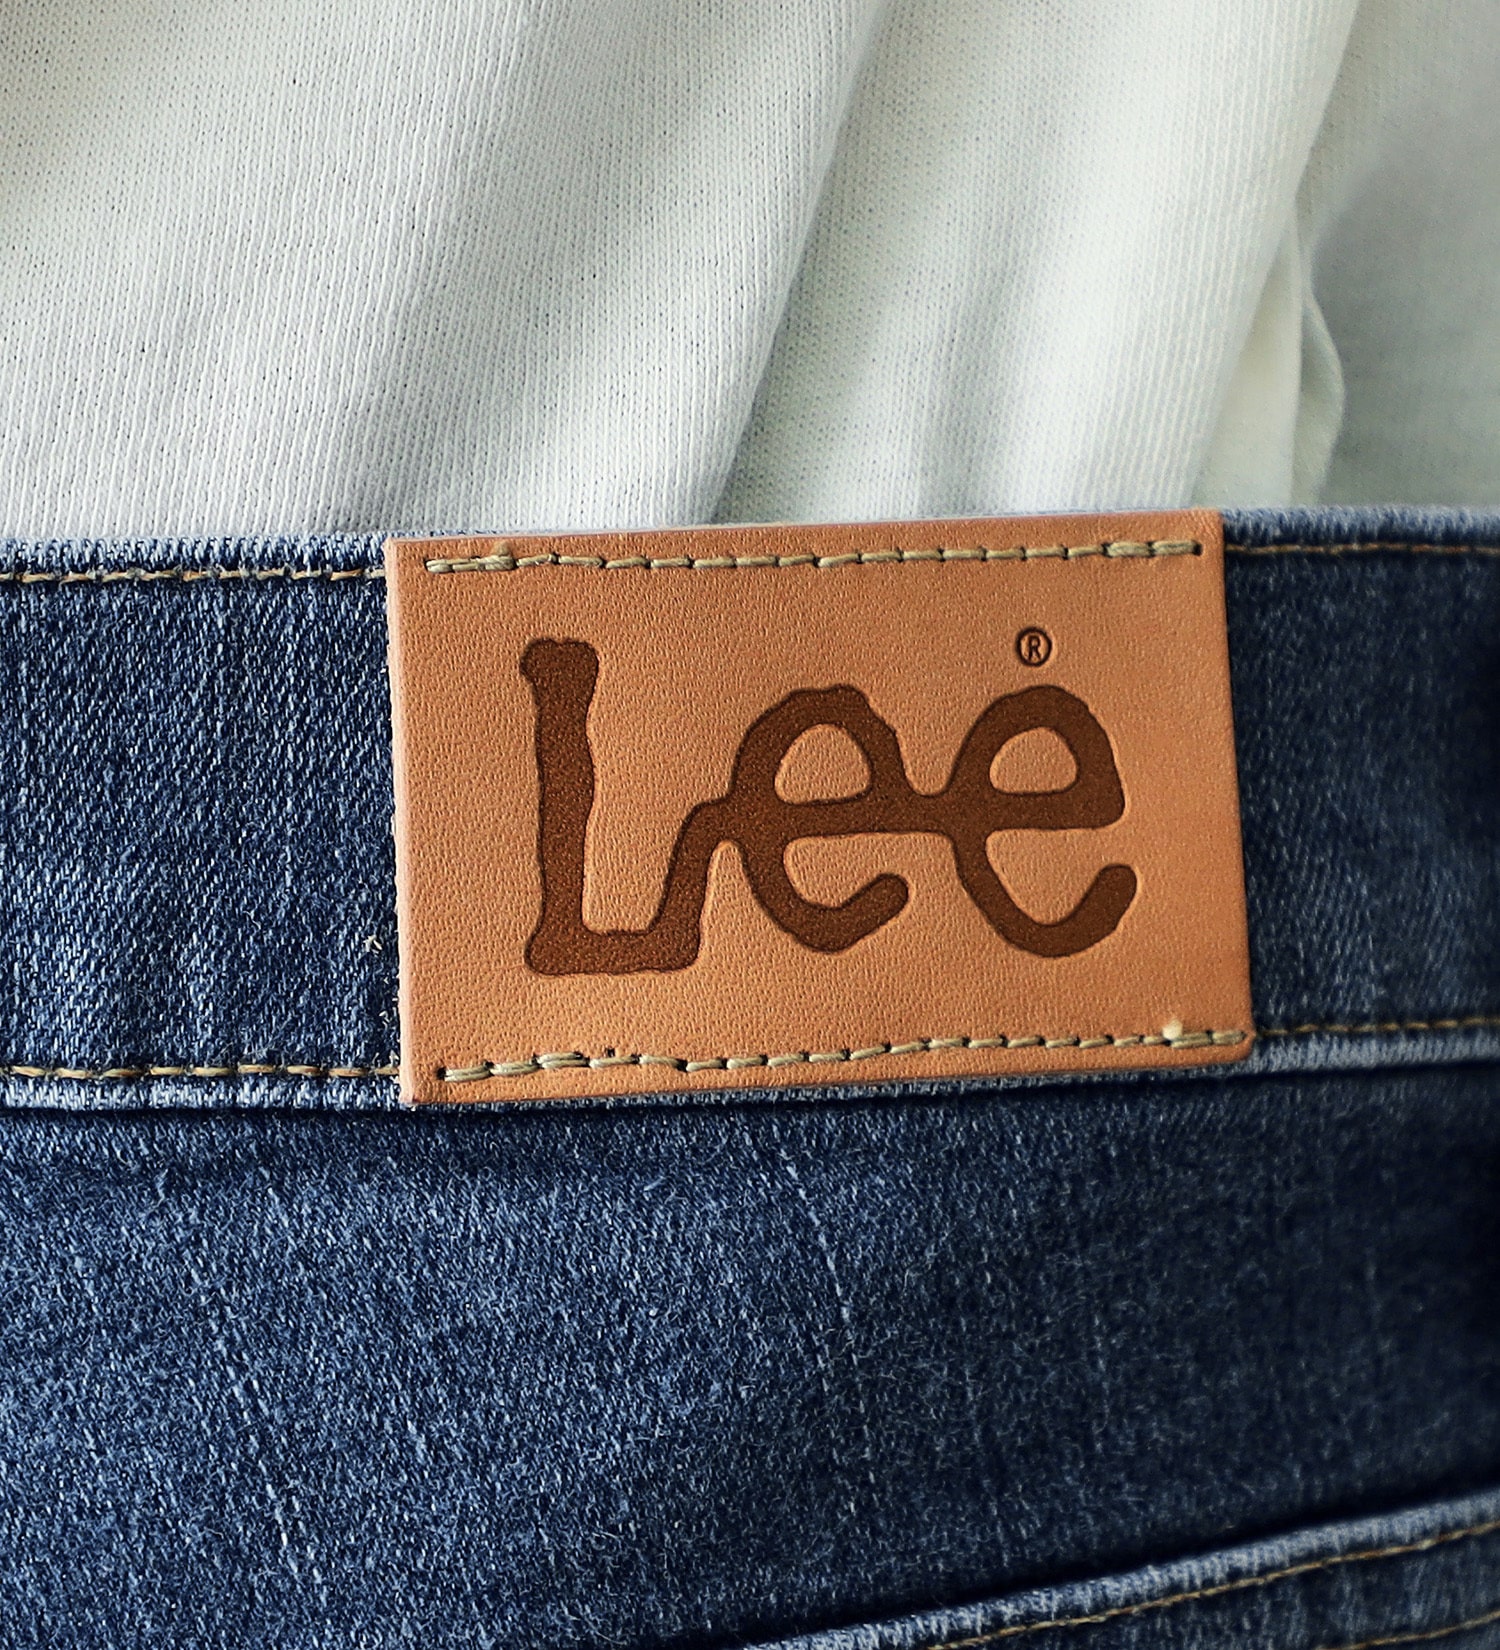 Lee(リー)の【GW SALE】【超快適ストレッチ】すっきり細身スキニーパンツ|パンツ/デニムパンツ/メンズ|中色ブルー